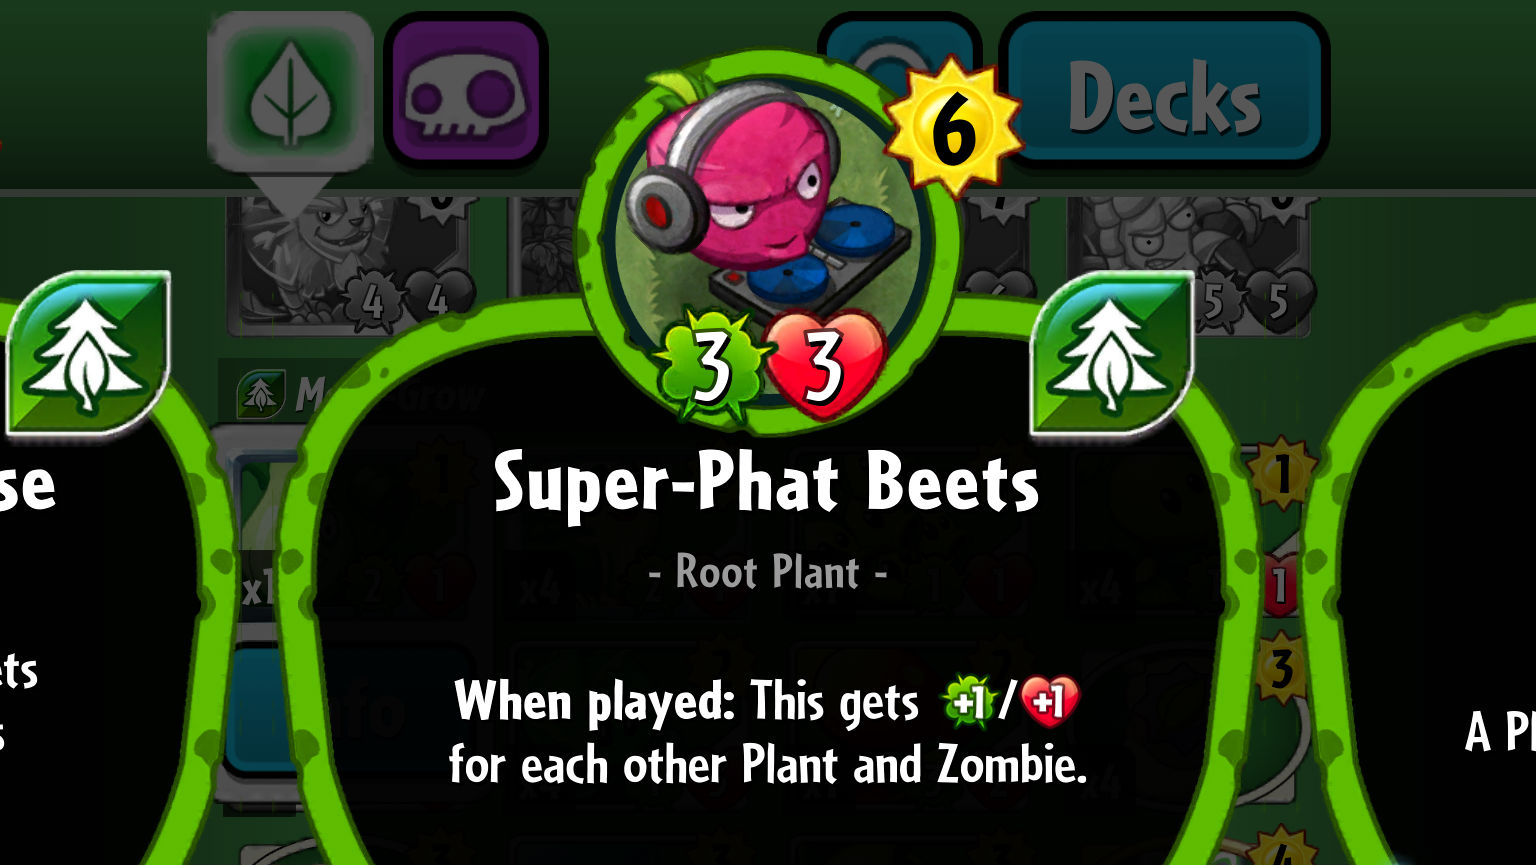 Plants vs. Zombies Super-Phat Beets